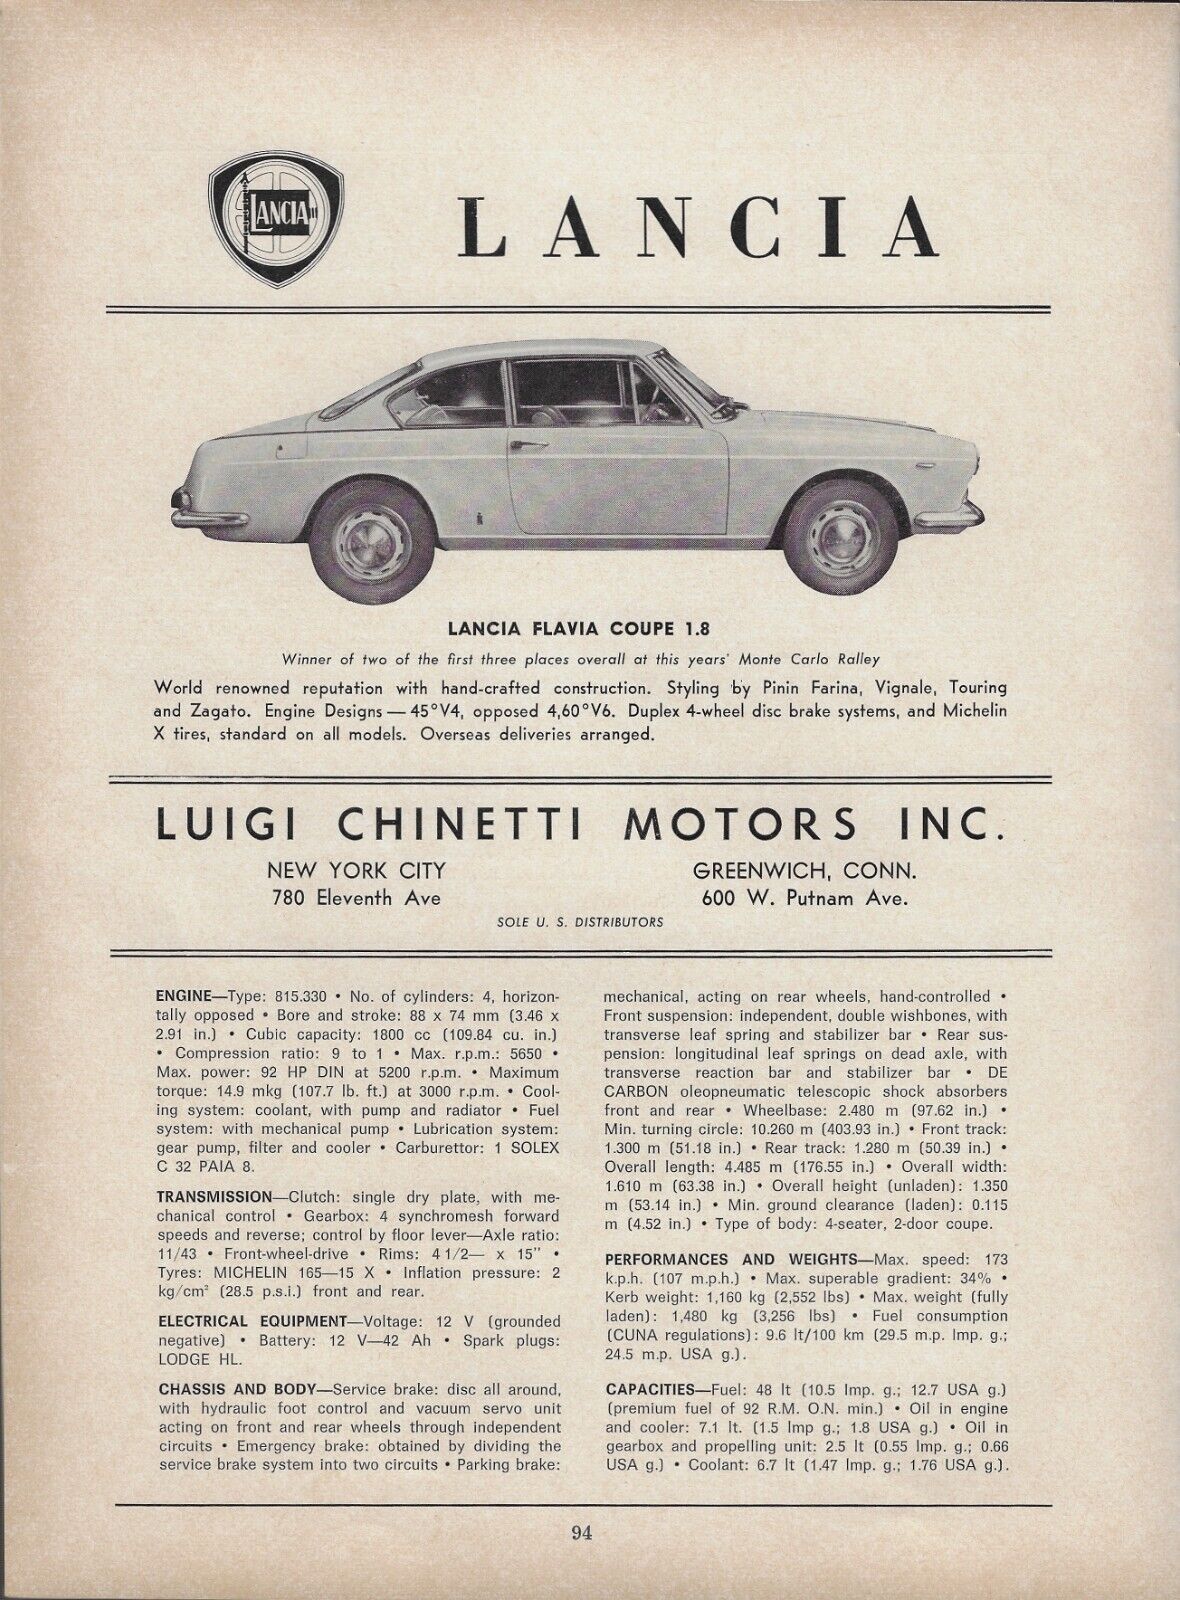 1966 Lancia Flavia Coupe 1.8 Monte Carlo Ralley Winner Photo Vintage PRINT AD